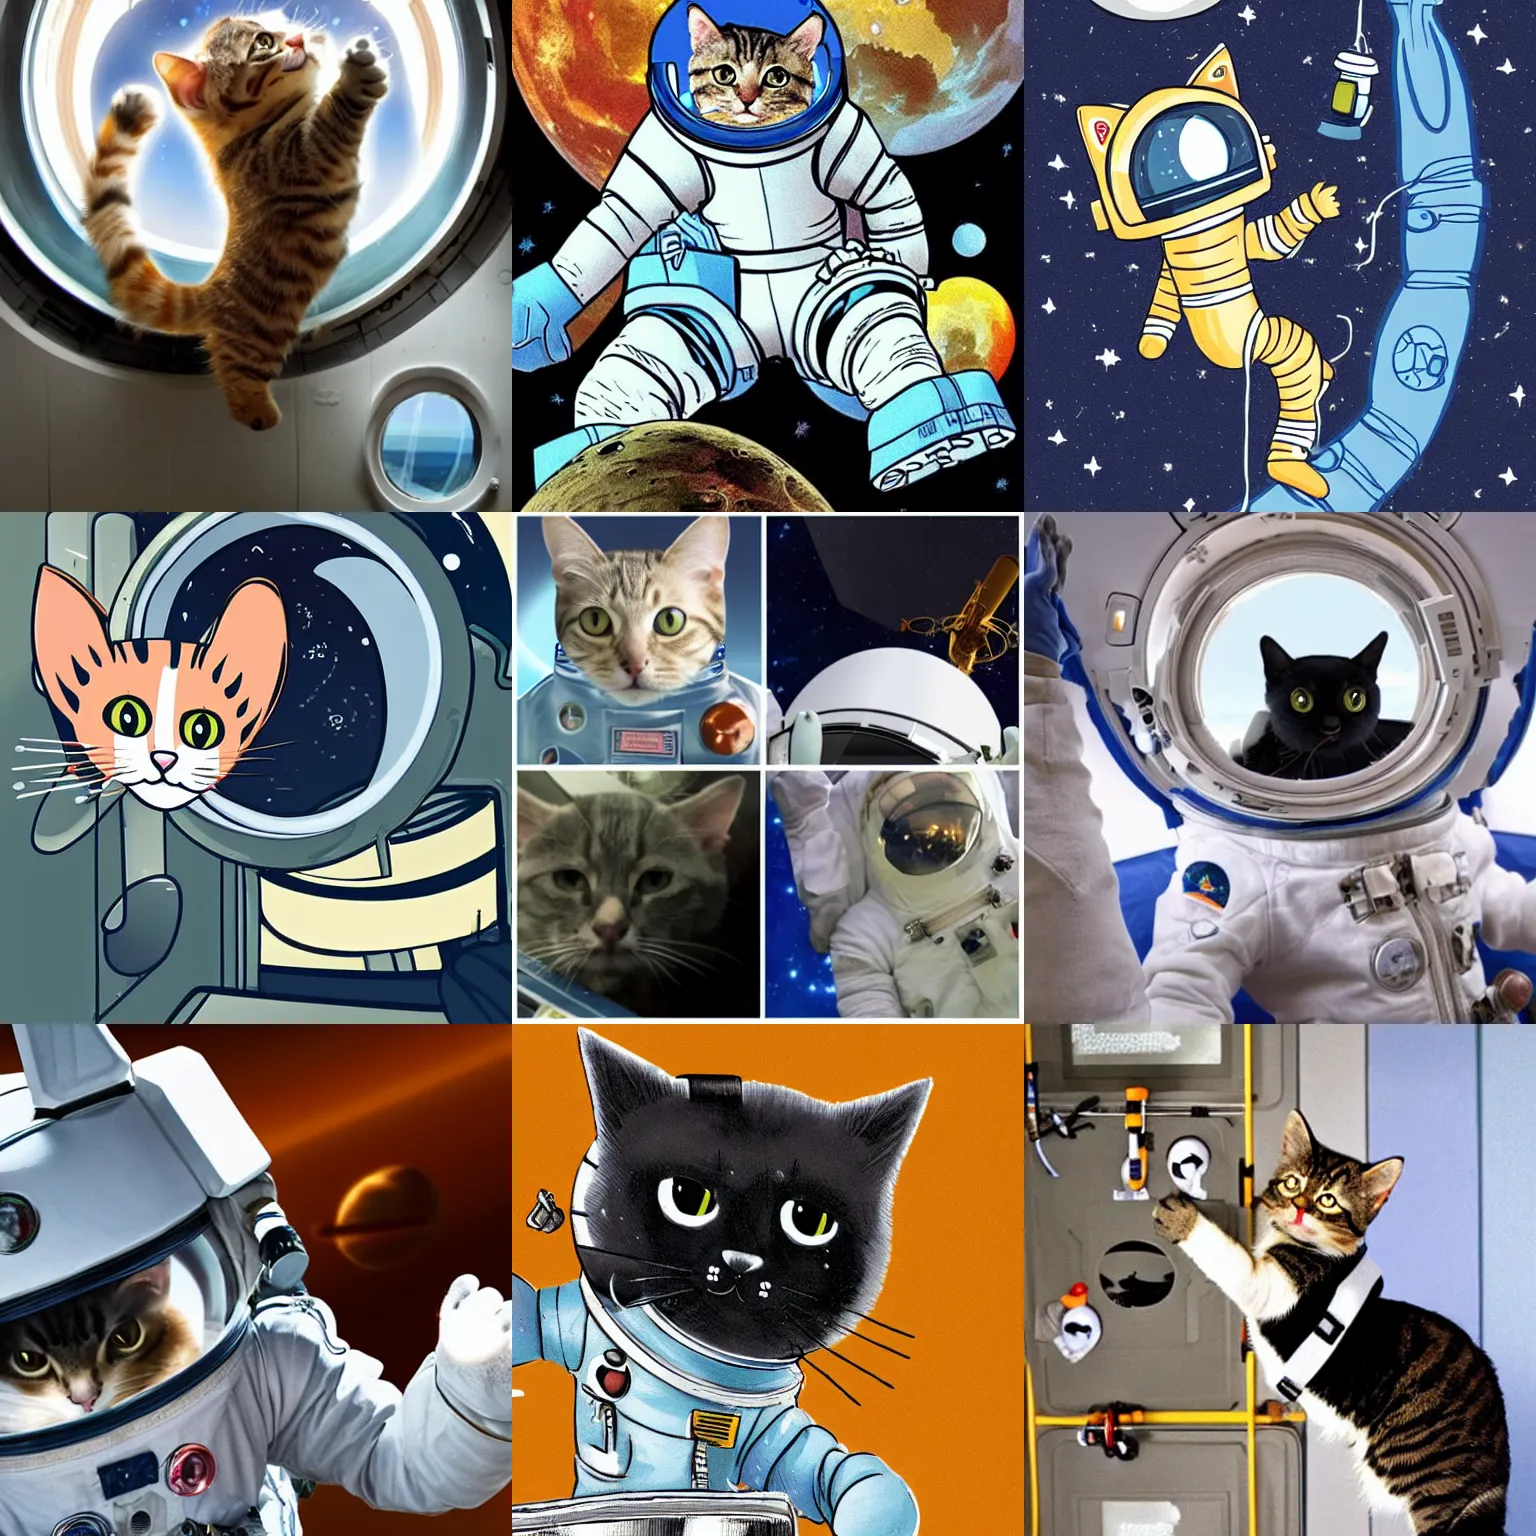 Prompt: cat astronaut climbing aboard spaceship, hard sci - fi